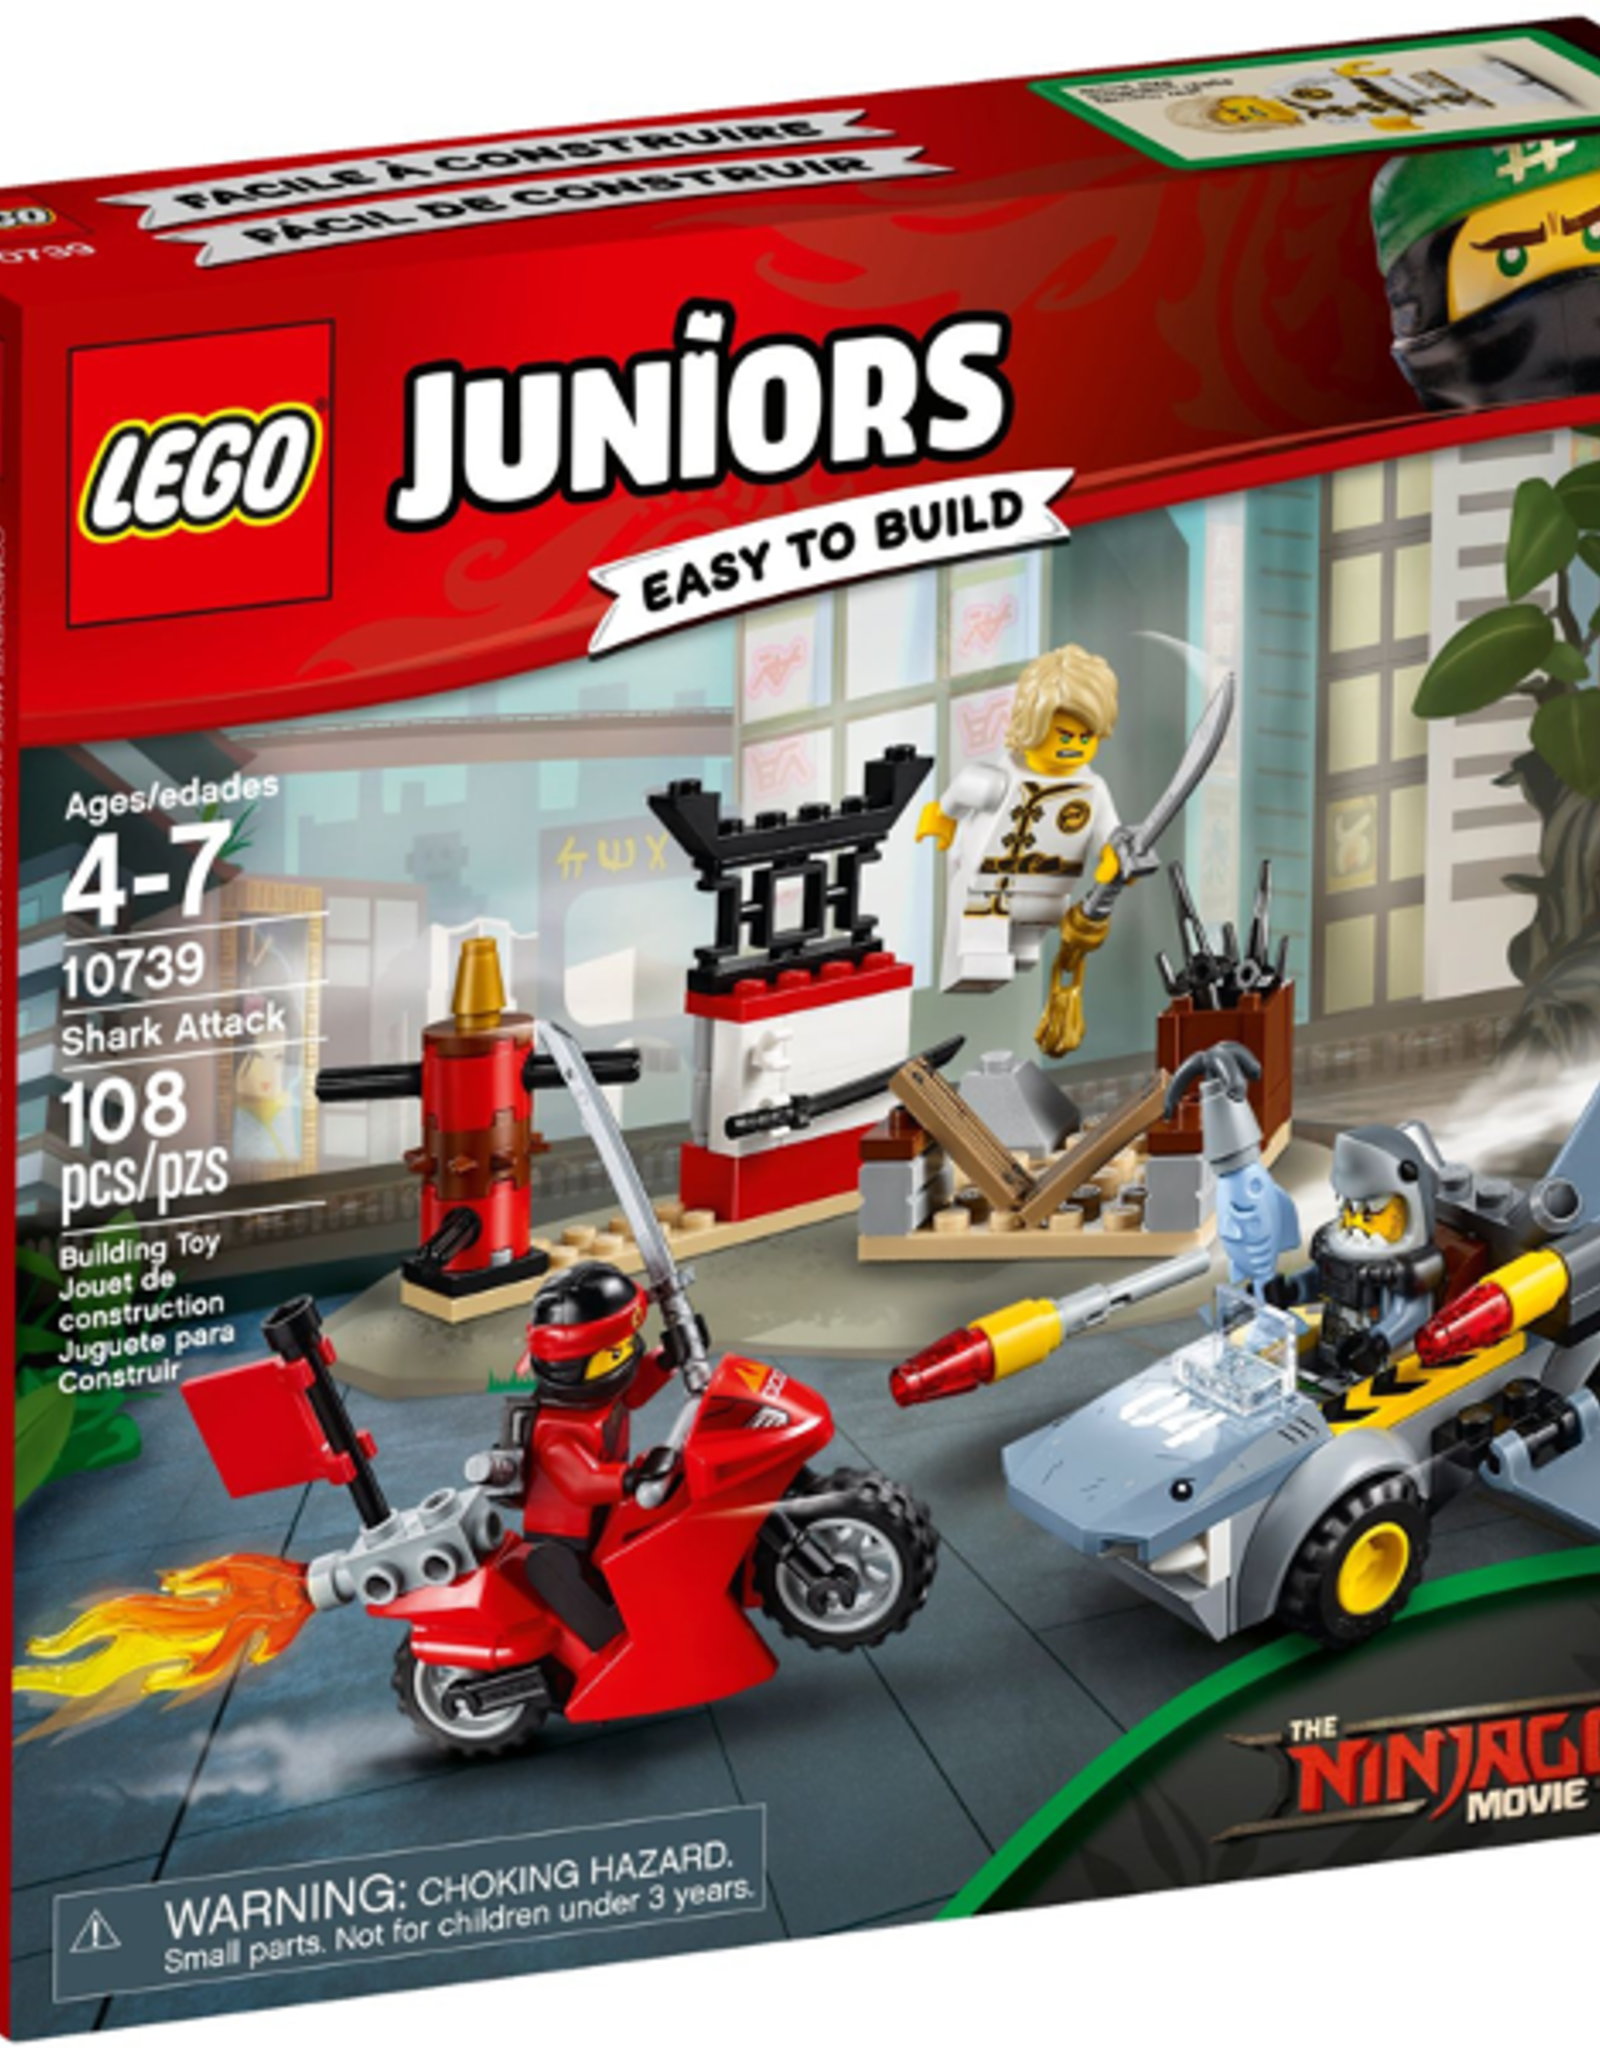 LEGO LEGO 10739 Shark Attack Ninjago the Movie JUNIORS